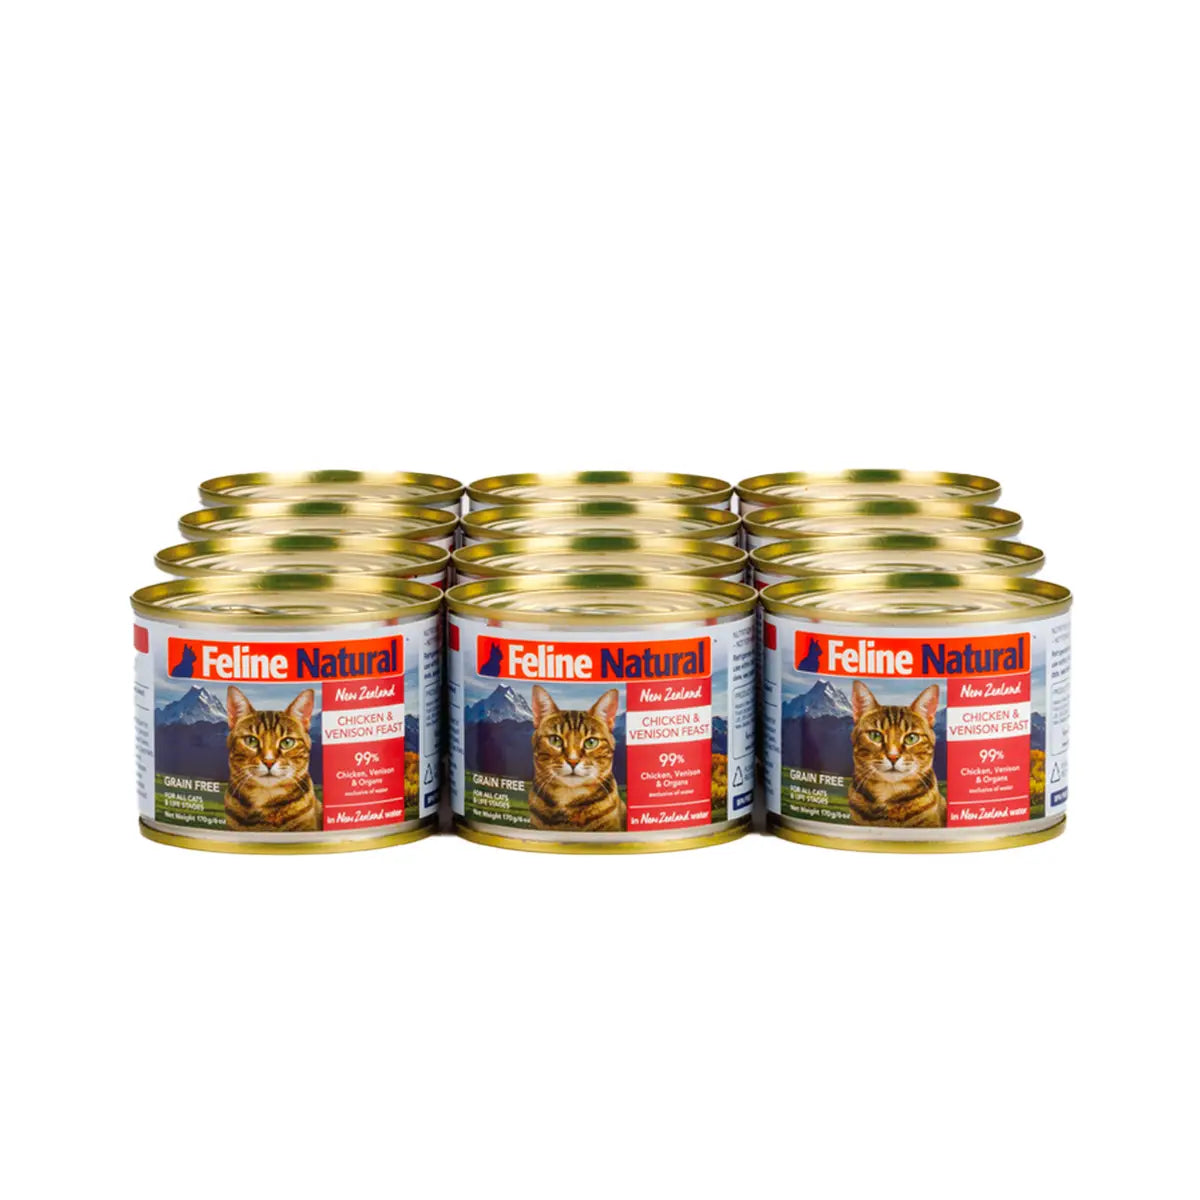 Feline Natural Canned Cat Food - Chicken & Venison